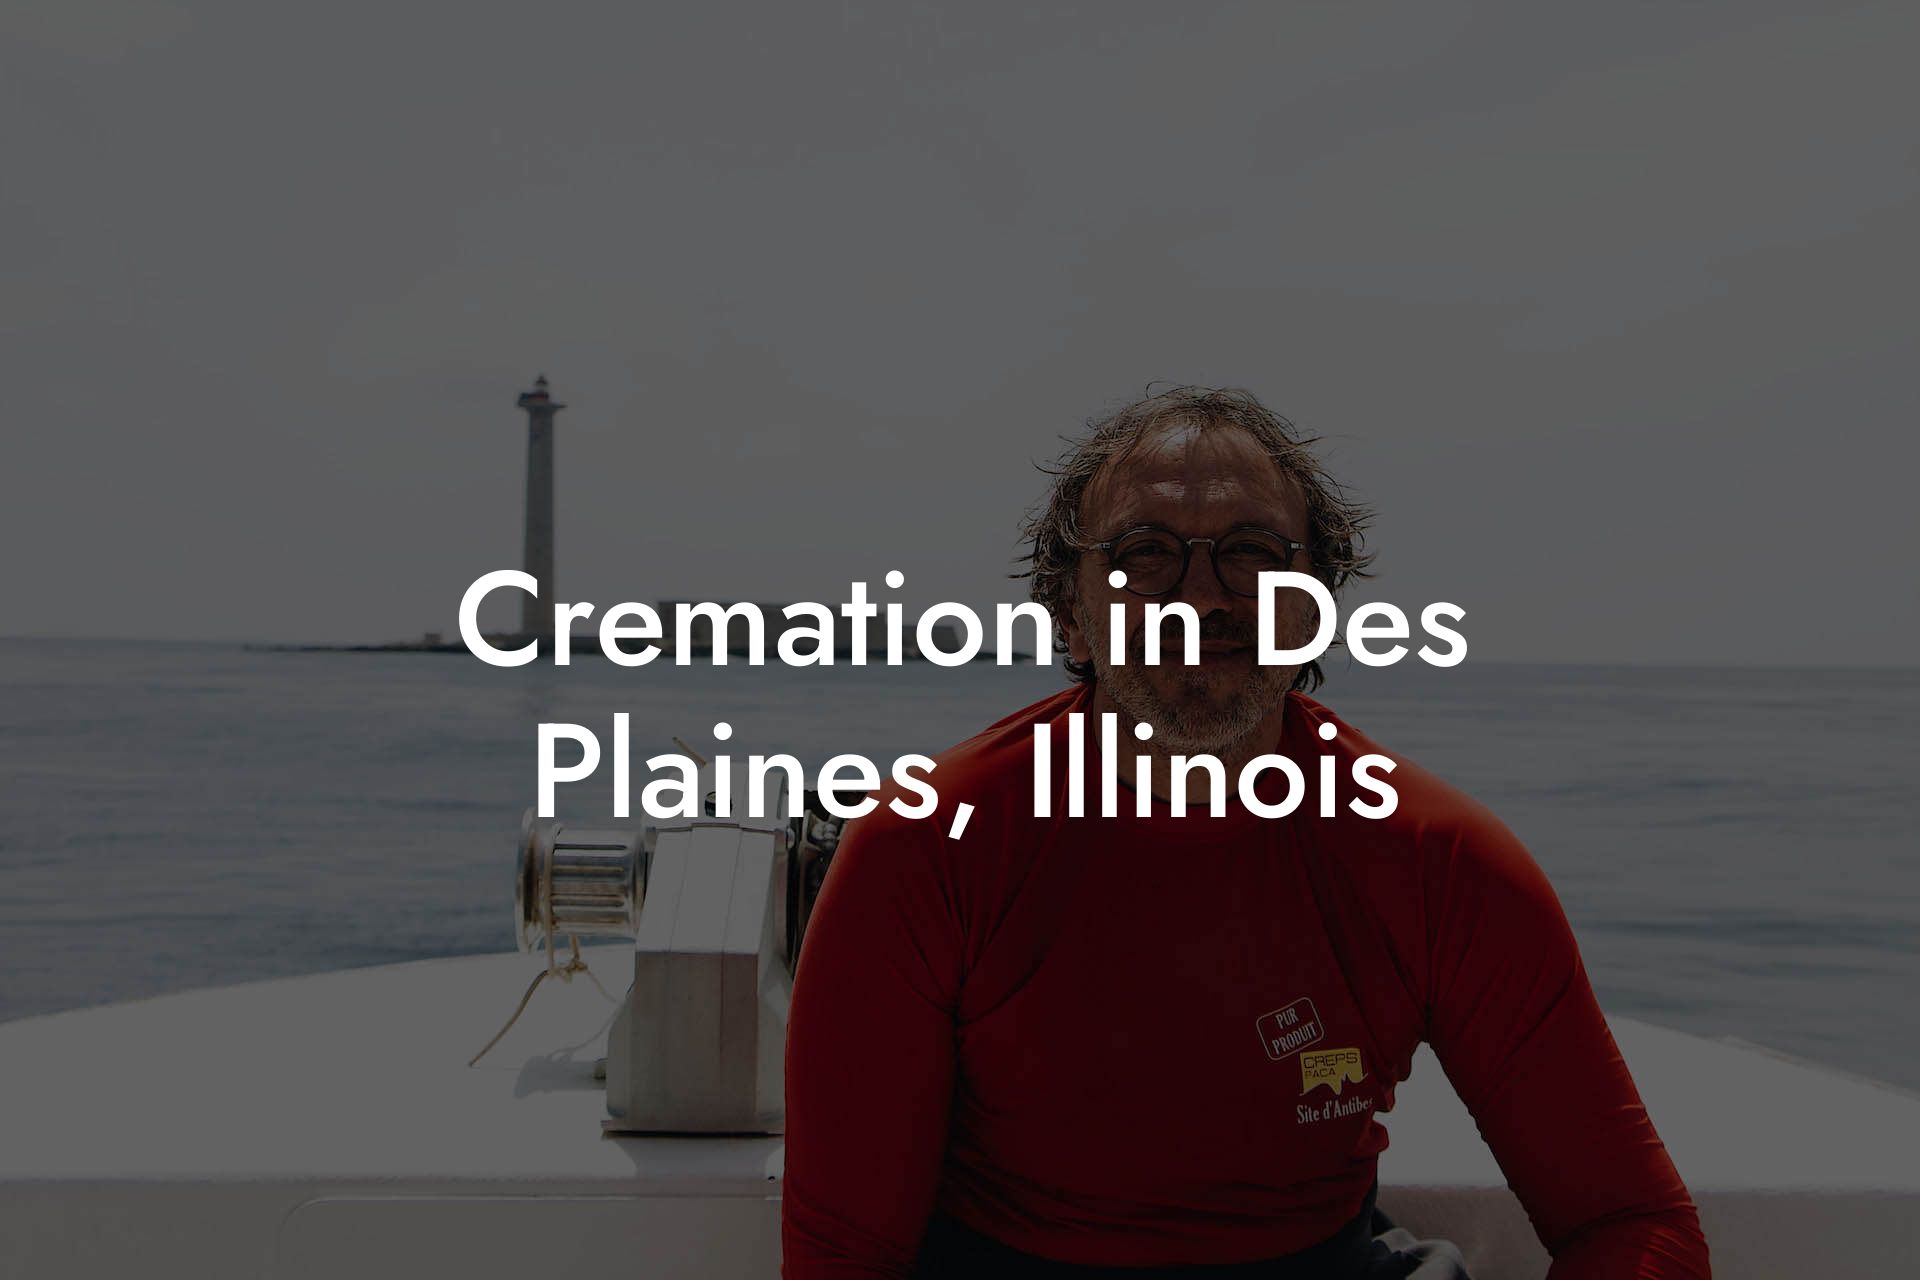 Cremation in Des Plaines, Illinois